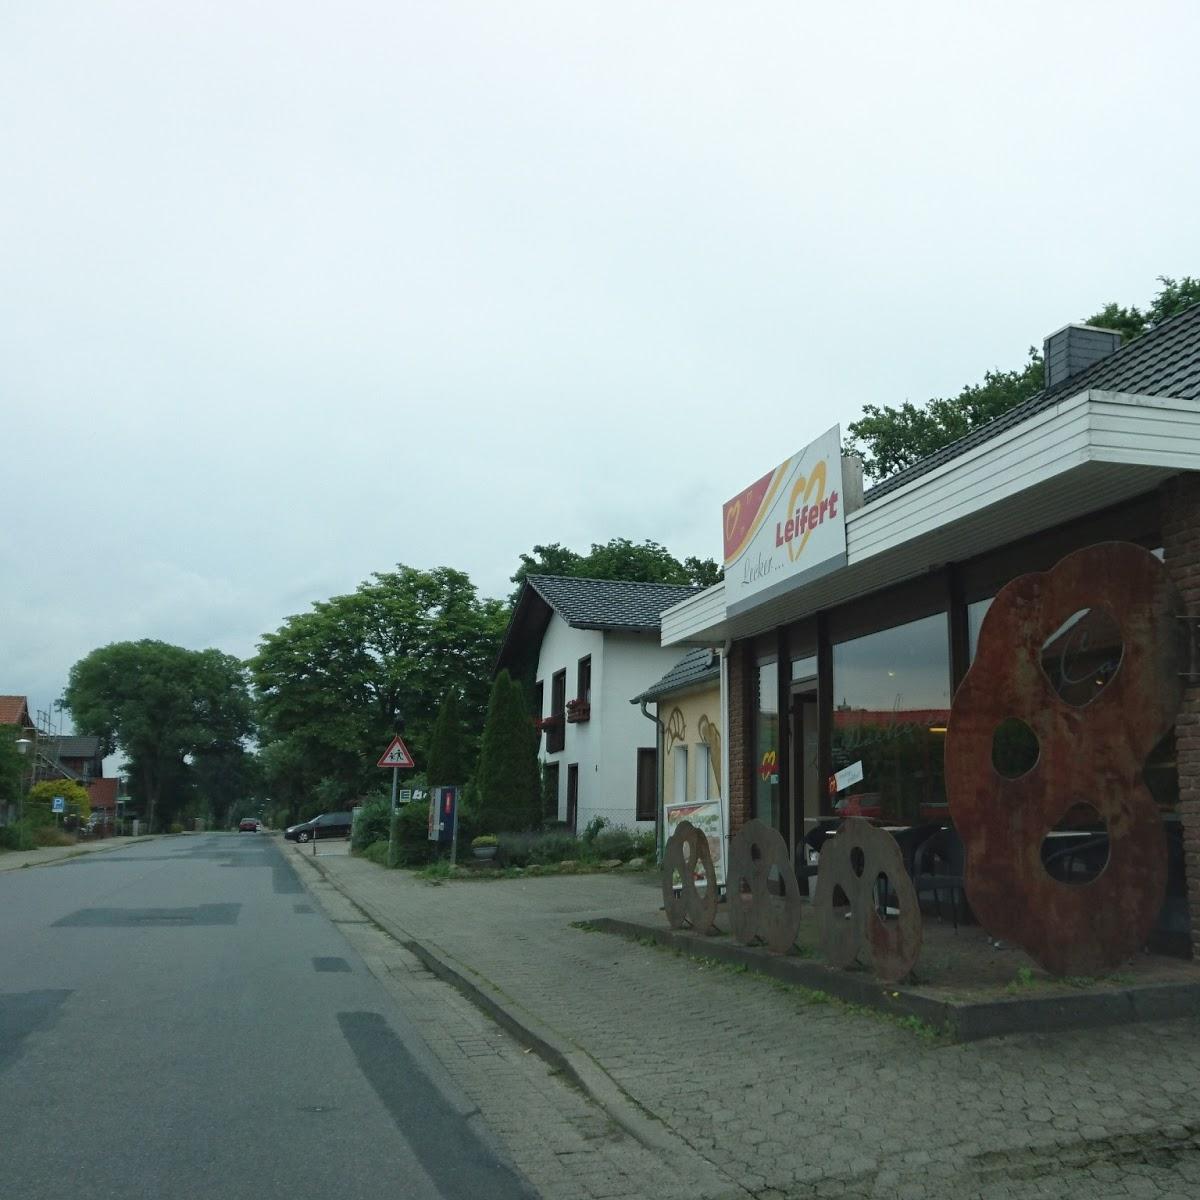 Restaurant "Bäckerei Leifert" in  Jembke